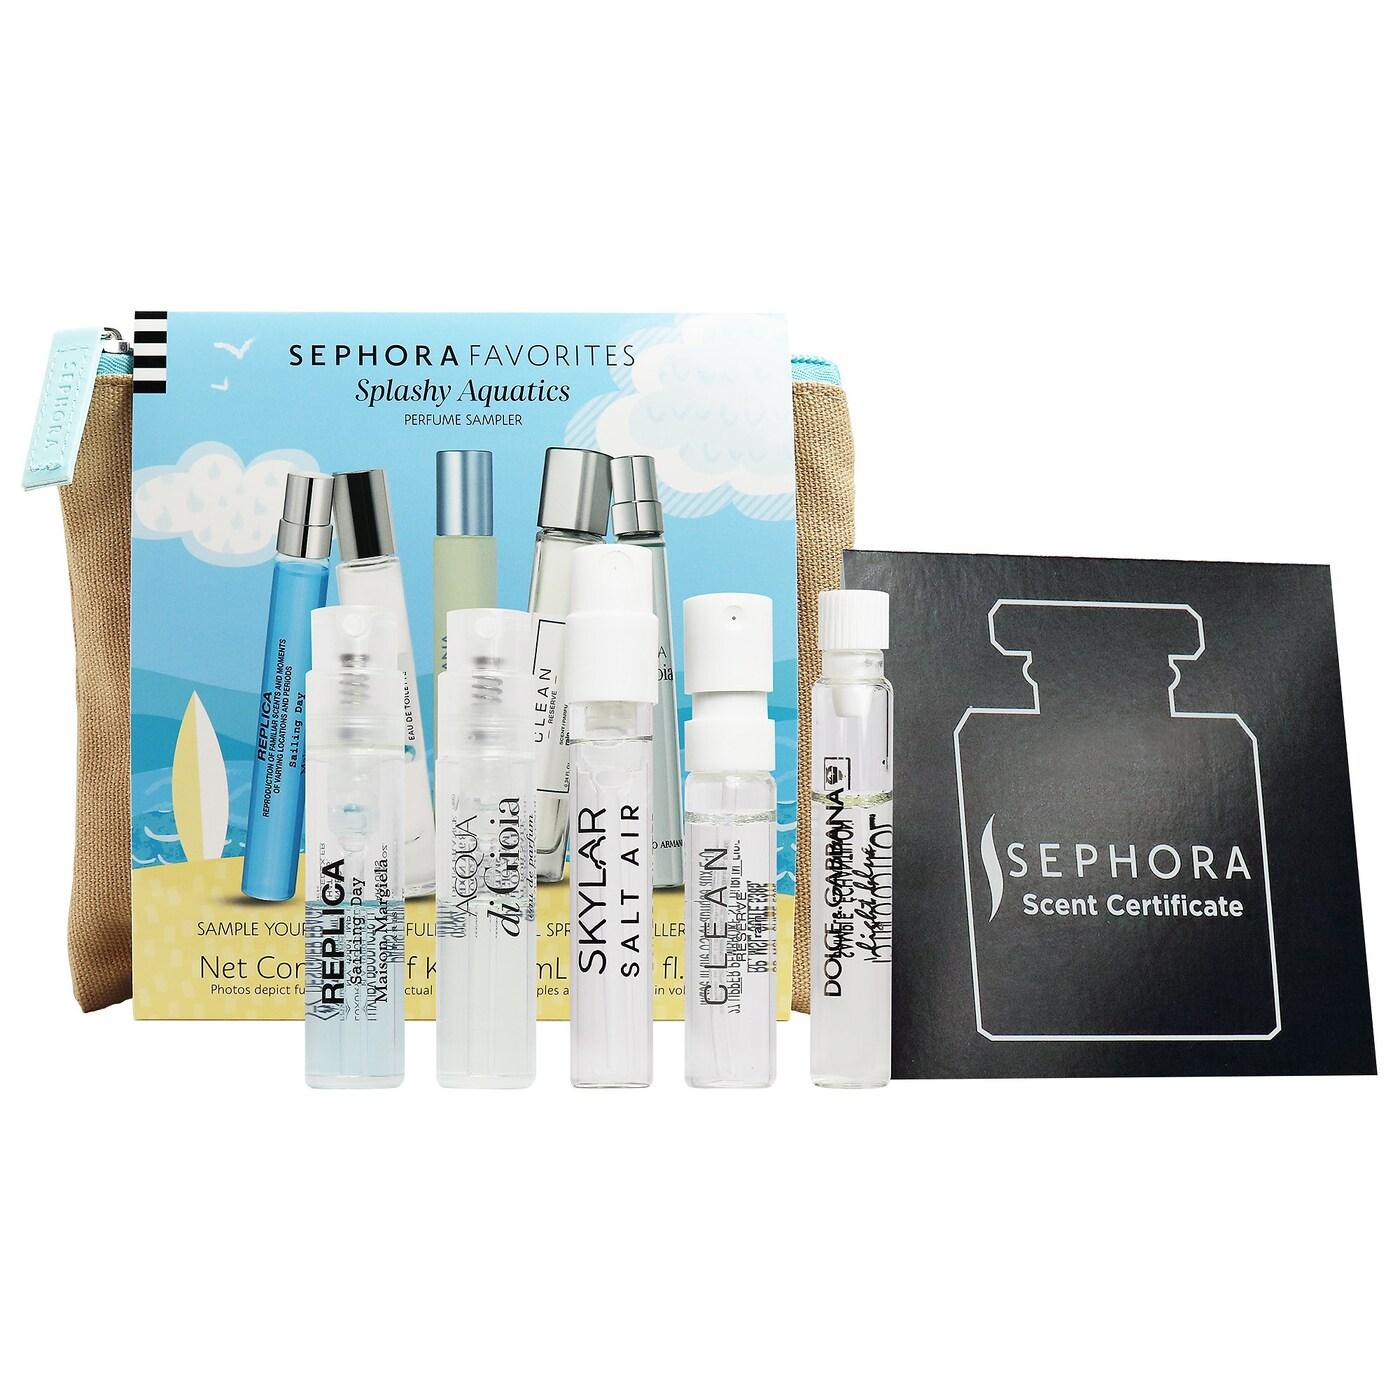 SEPHORA Favorites Bestselling Aquatic Perfume Sampler Set – On Sale Now